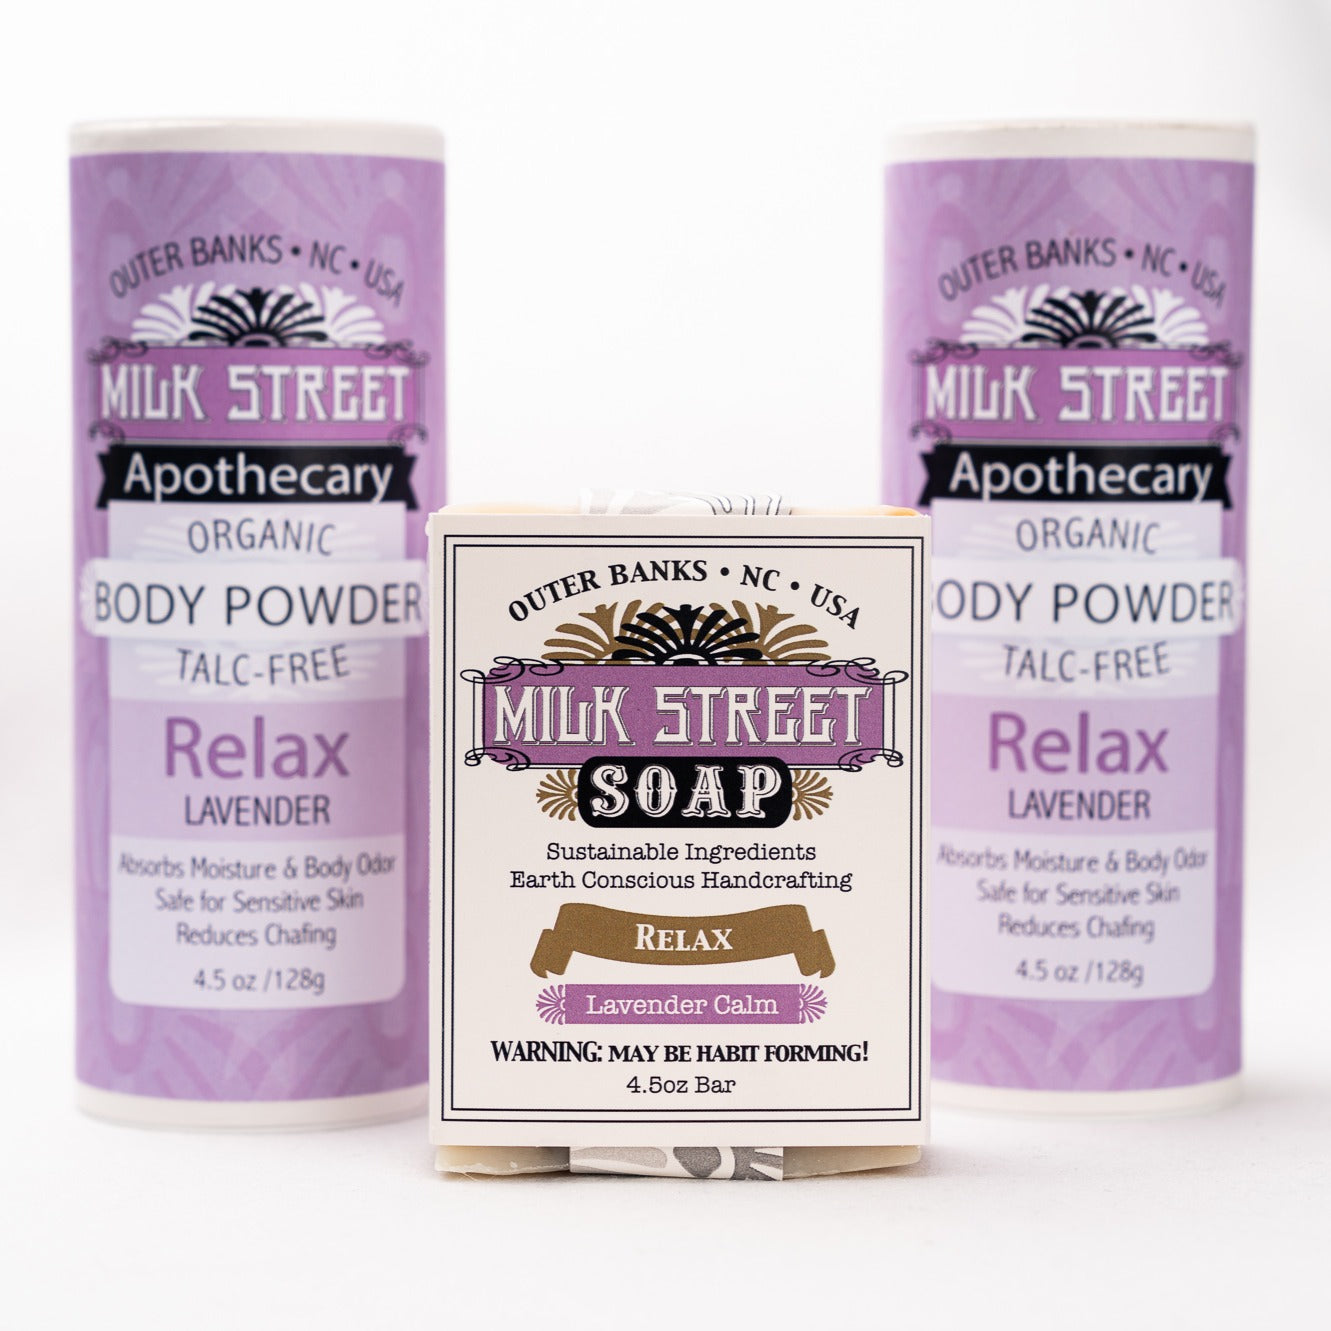 RELAX - Lavender Deodorizing VEGAN Body Powder